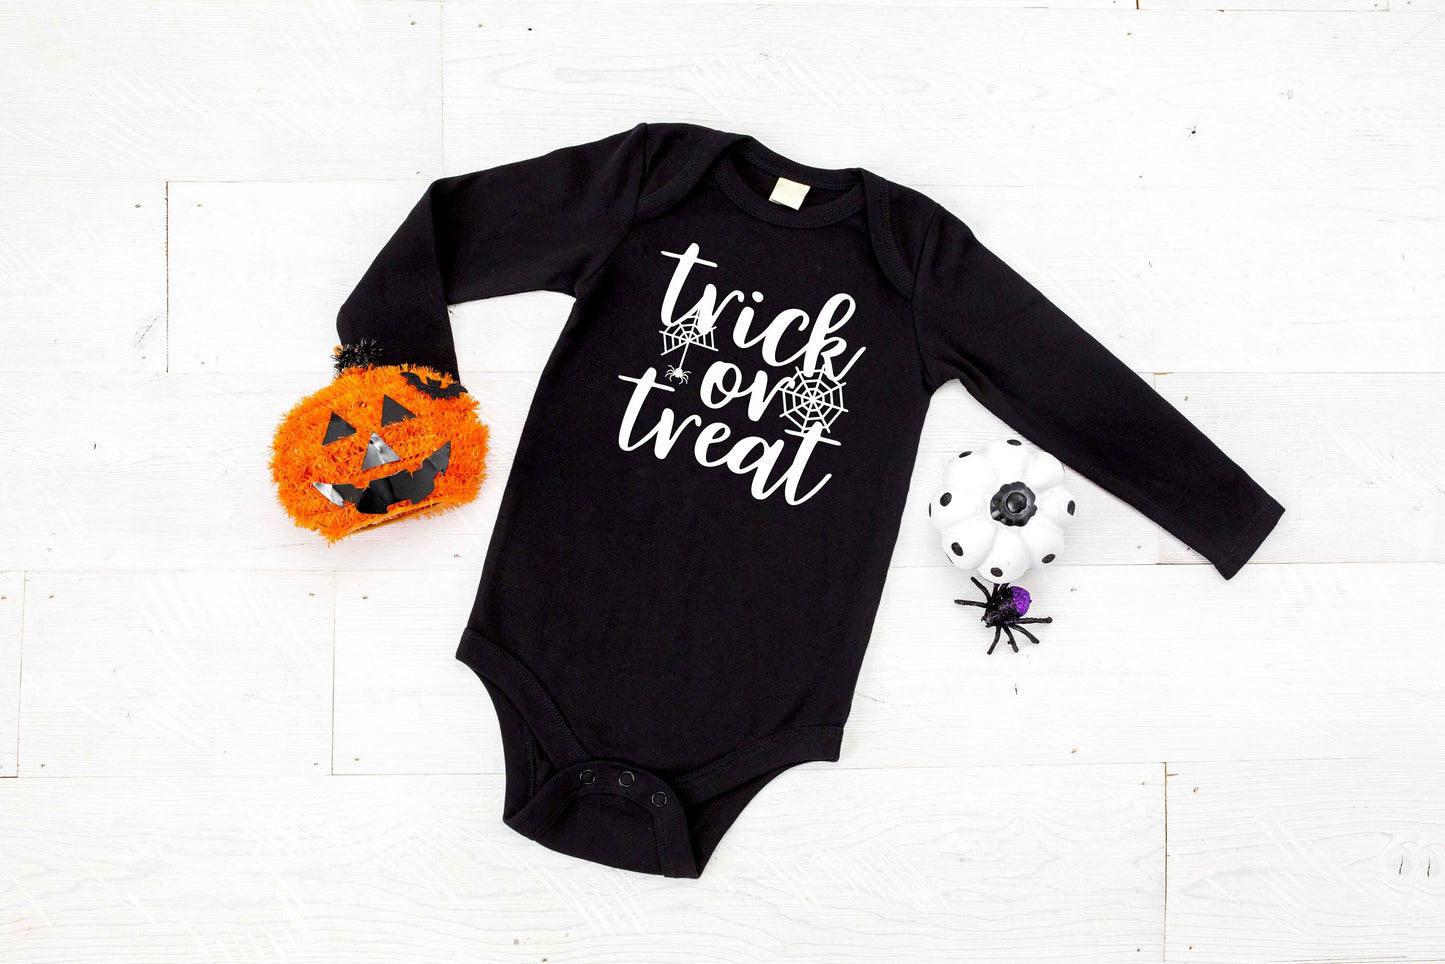 Trick or Treat v4 Infant Halloween Shirt or Bodysuit - My First Halloween - baby halloween shirt